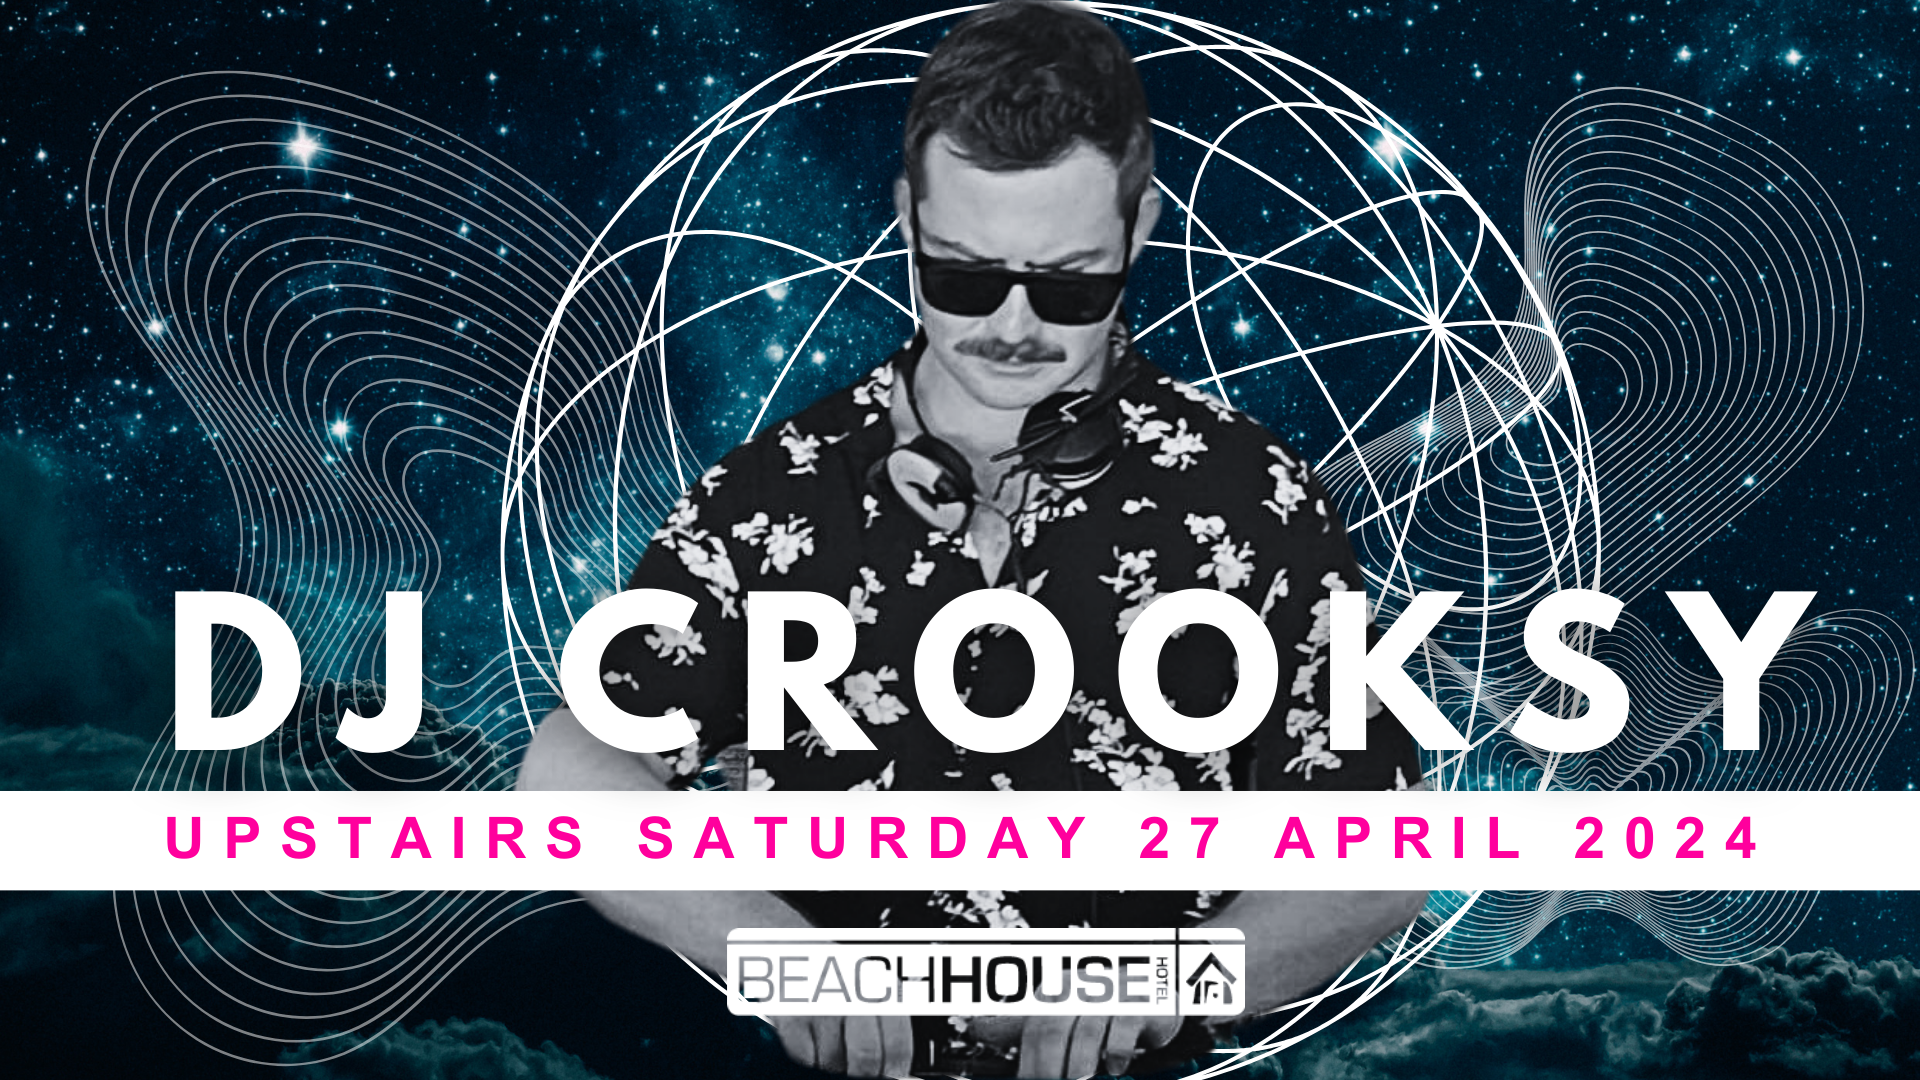 The Beach House Hotel House Party with DJ Crooksy